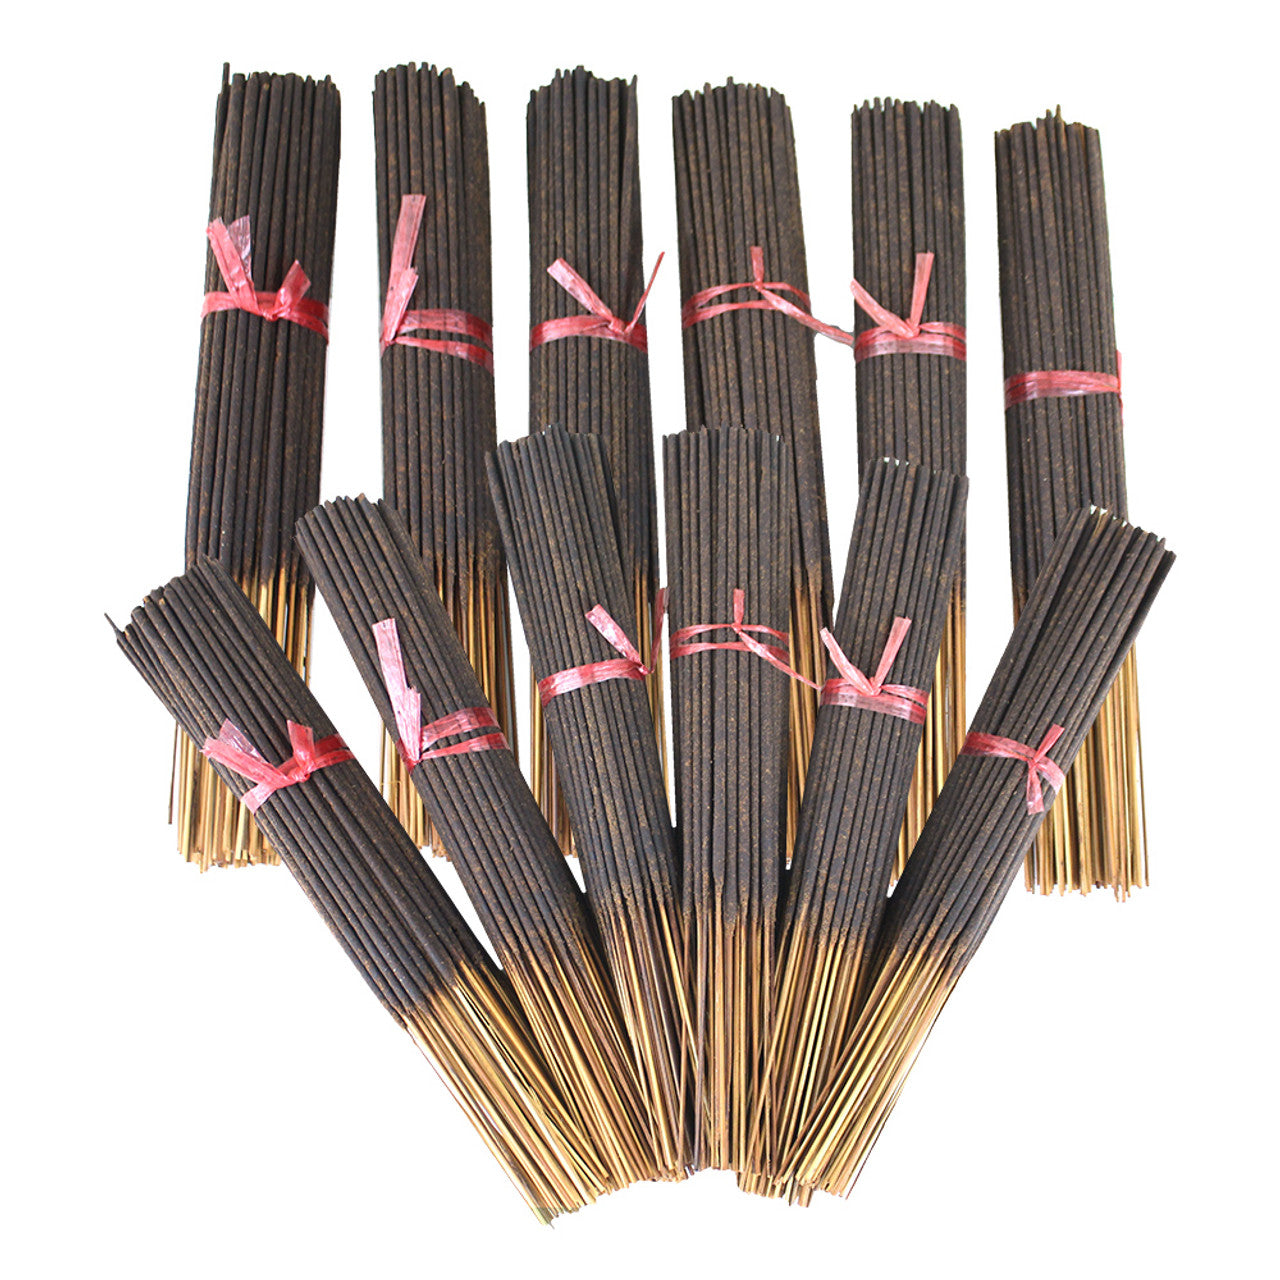 Fragrant Incense Stick Bundles (approx 95-100 sticks per bundle)